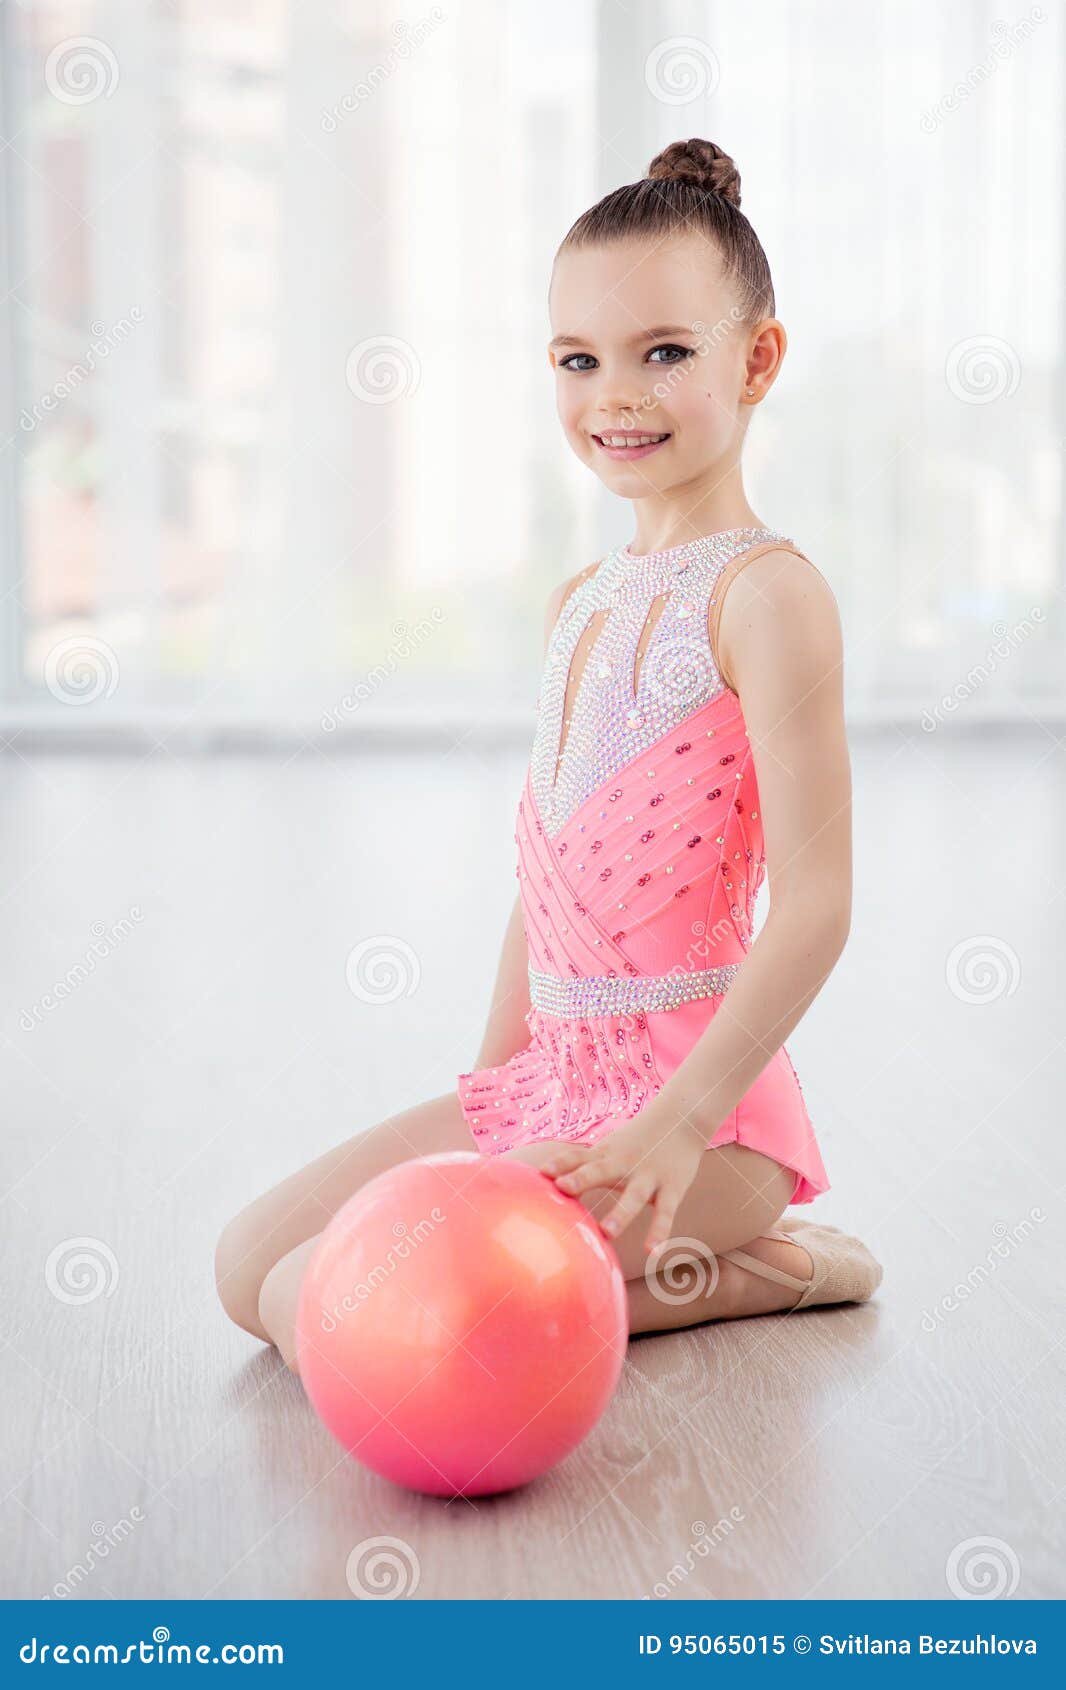 https://thumbs.dreamstime.com/z/beautiful-little-gymnast-girl-pink-sportswear-dress-performing-art-gymnastics-element-ball-fitness-class-portret-95065015.jpg